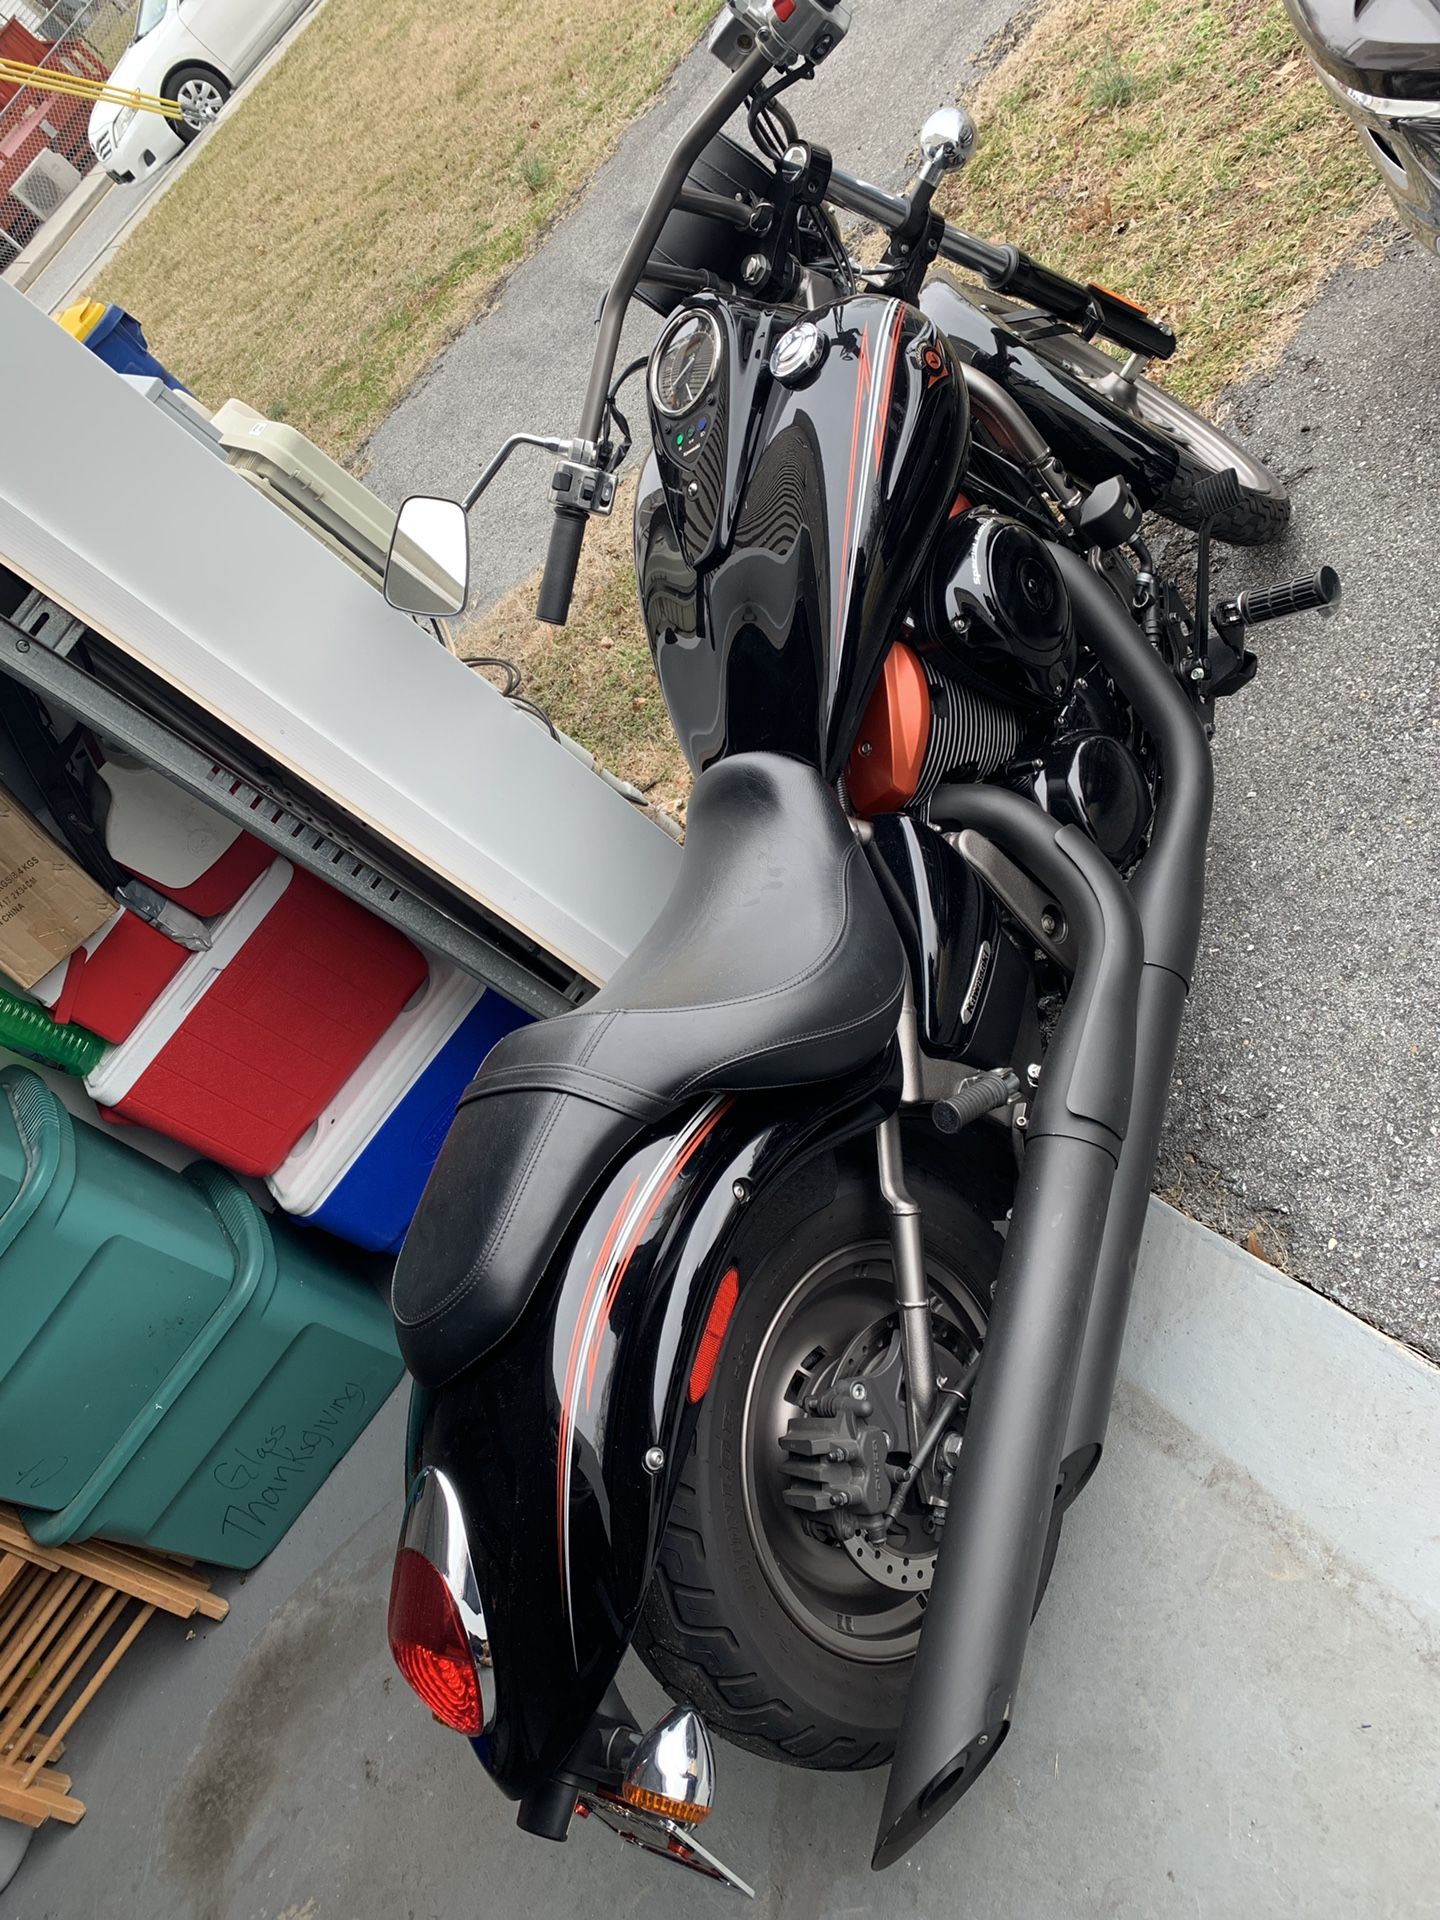 Kawasaki Motorcycle for sale!! 8,600 miles!! $3,000